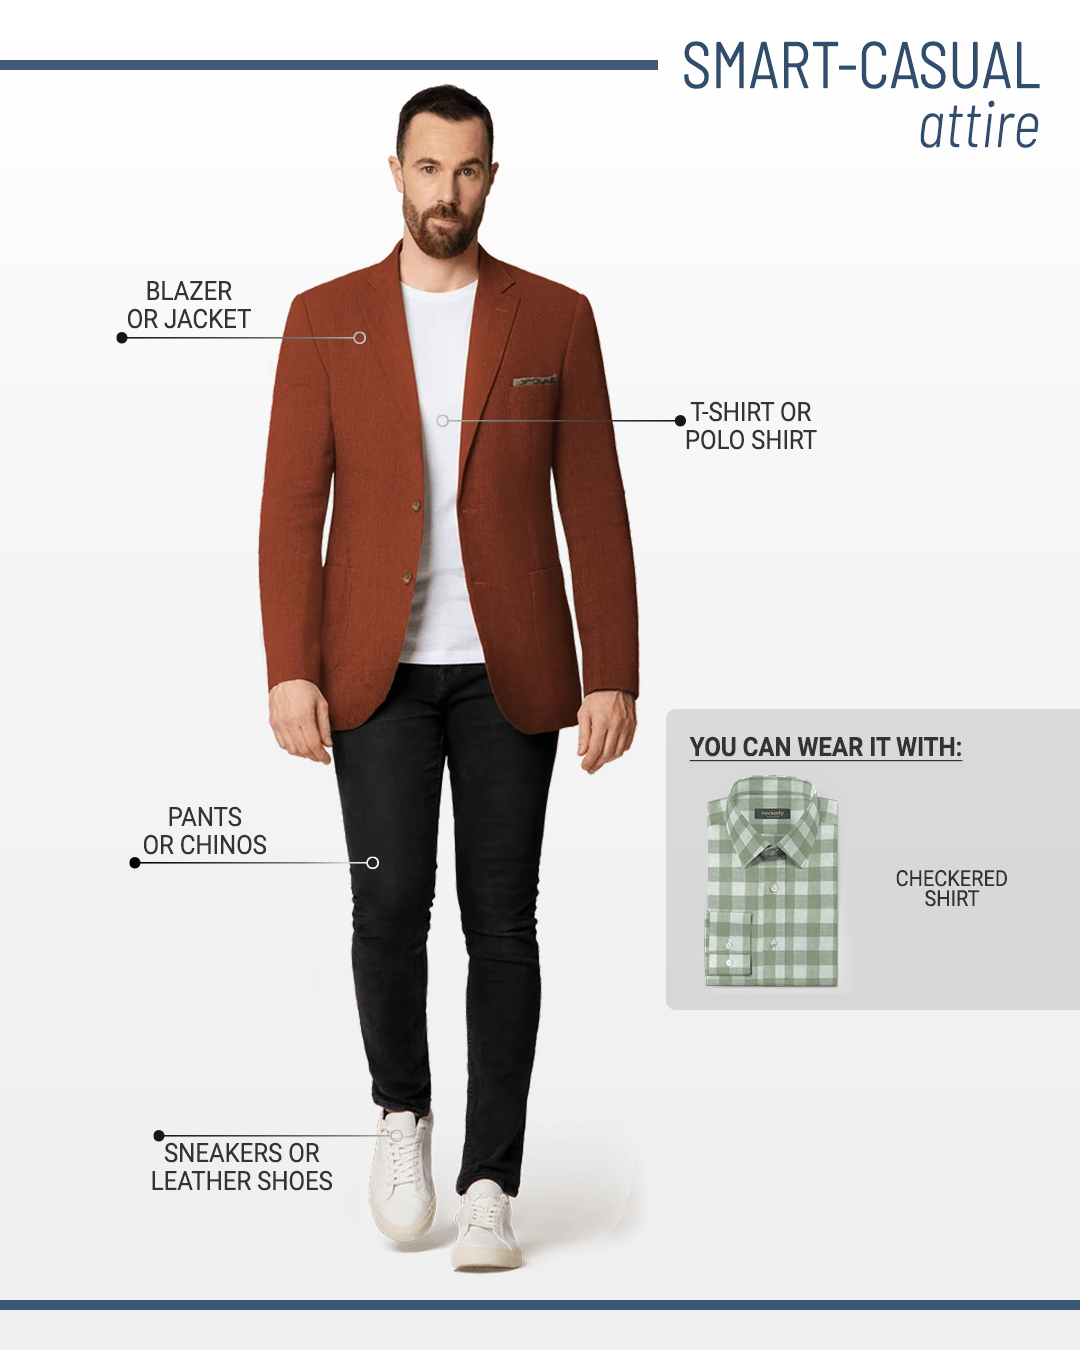 Smart casual derss code and attire for men